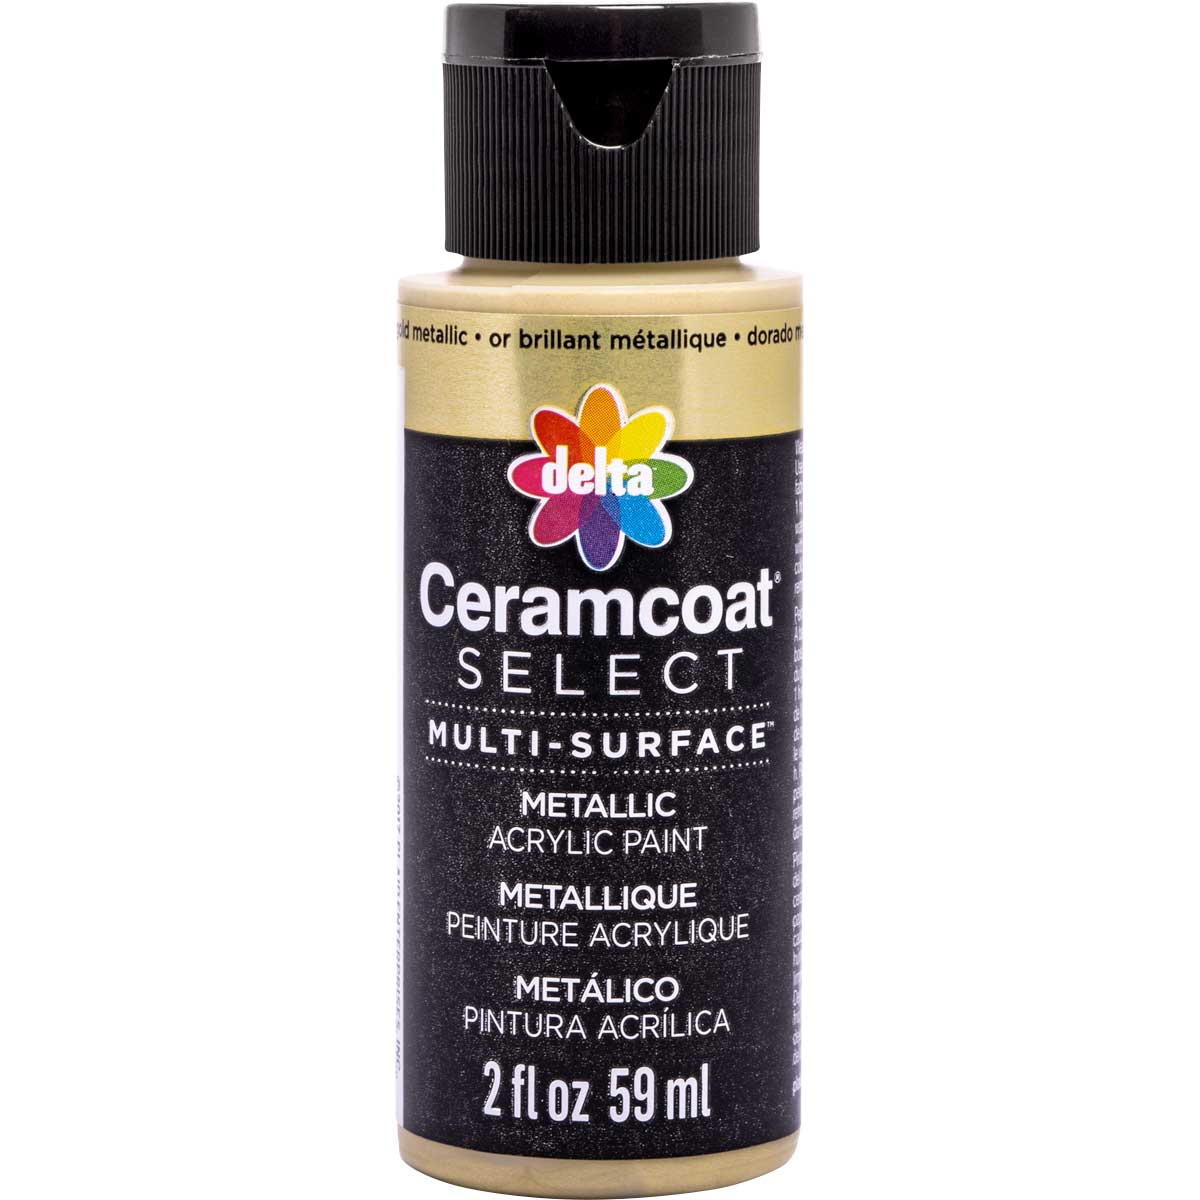 Delta Ceramcoat ® Select Multi-Surface Acrylic Paint - Metallic - Bright Gold, 2 oz. - 04108